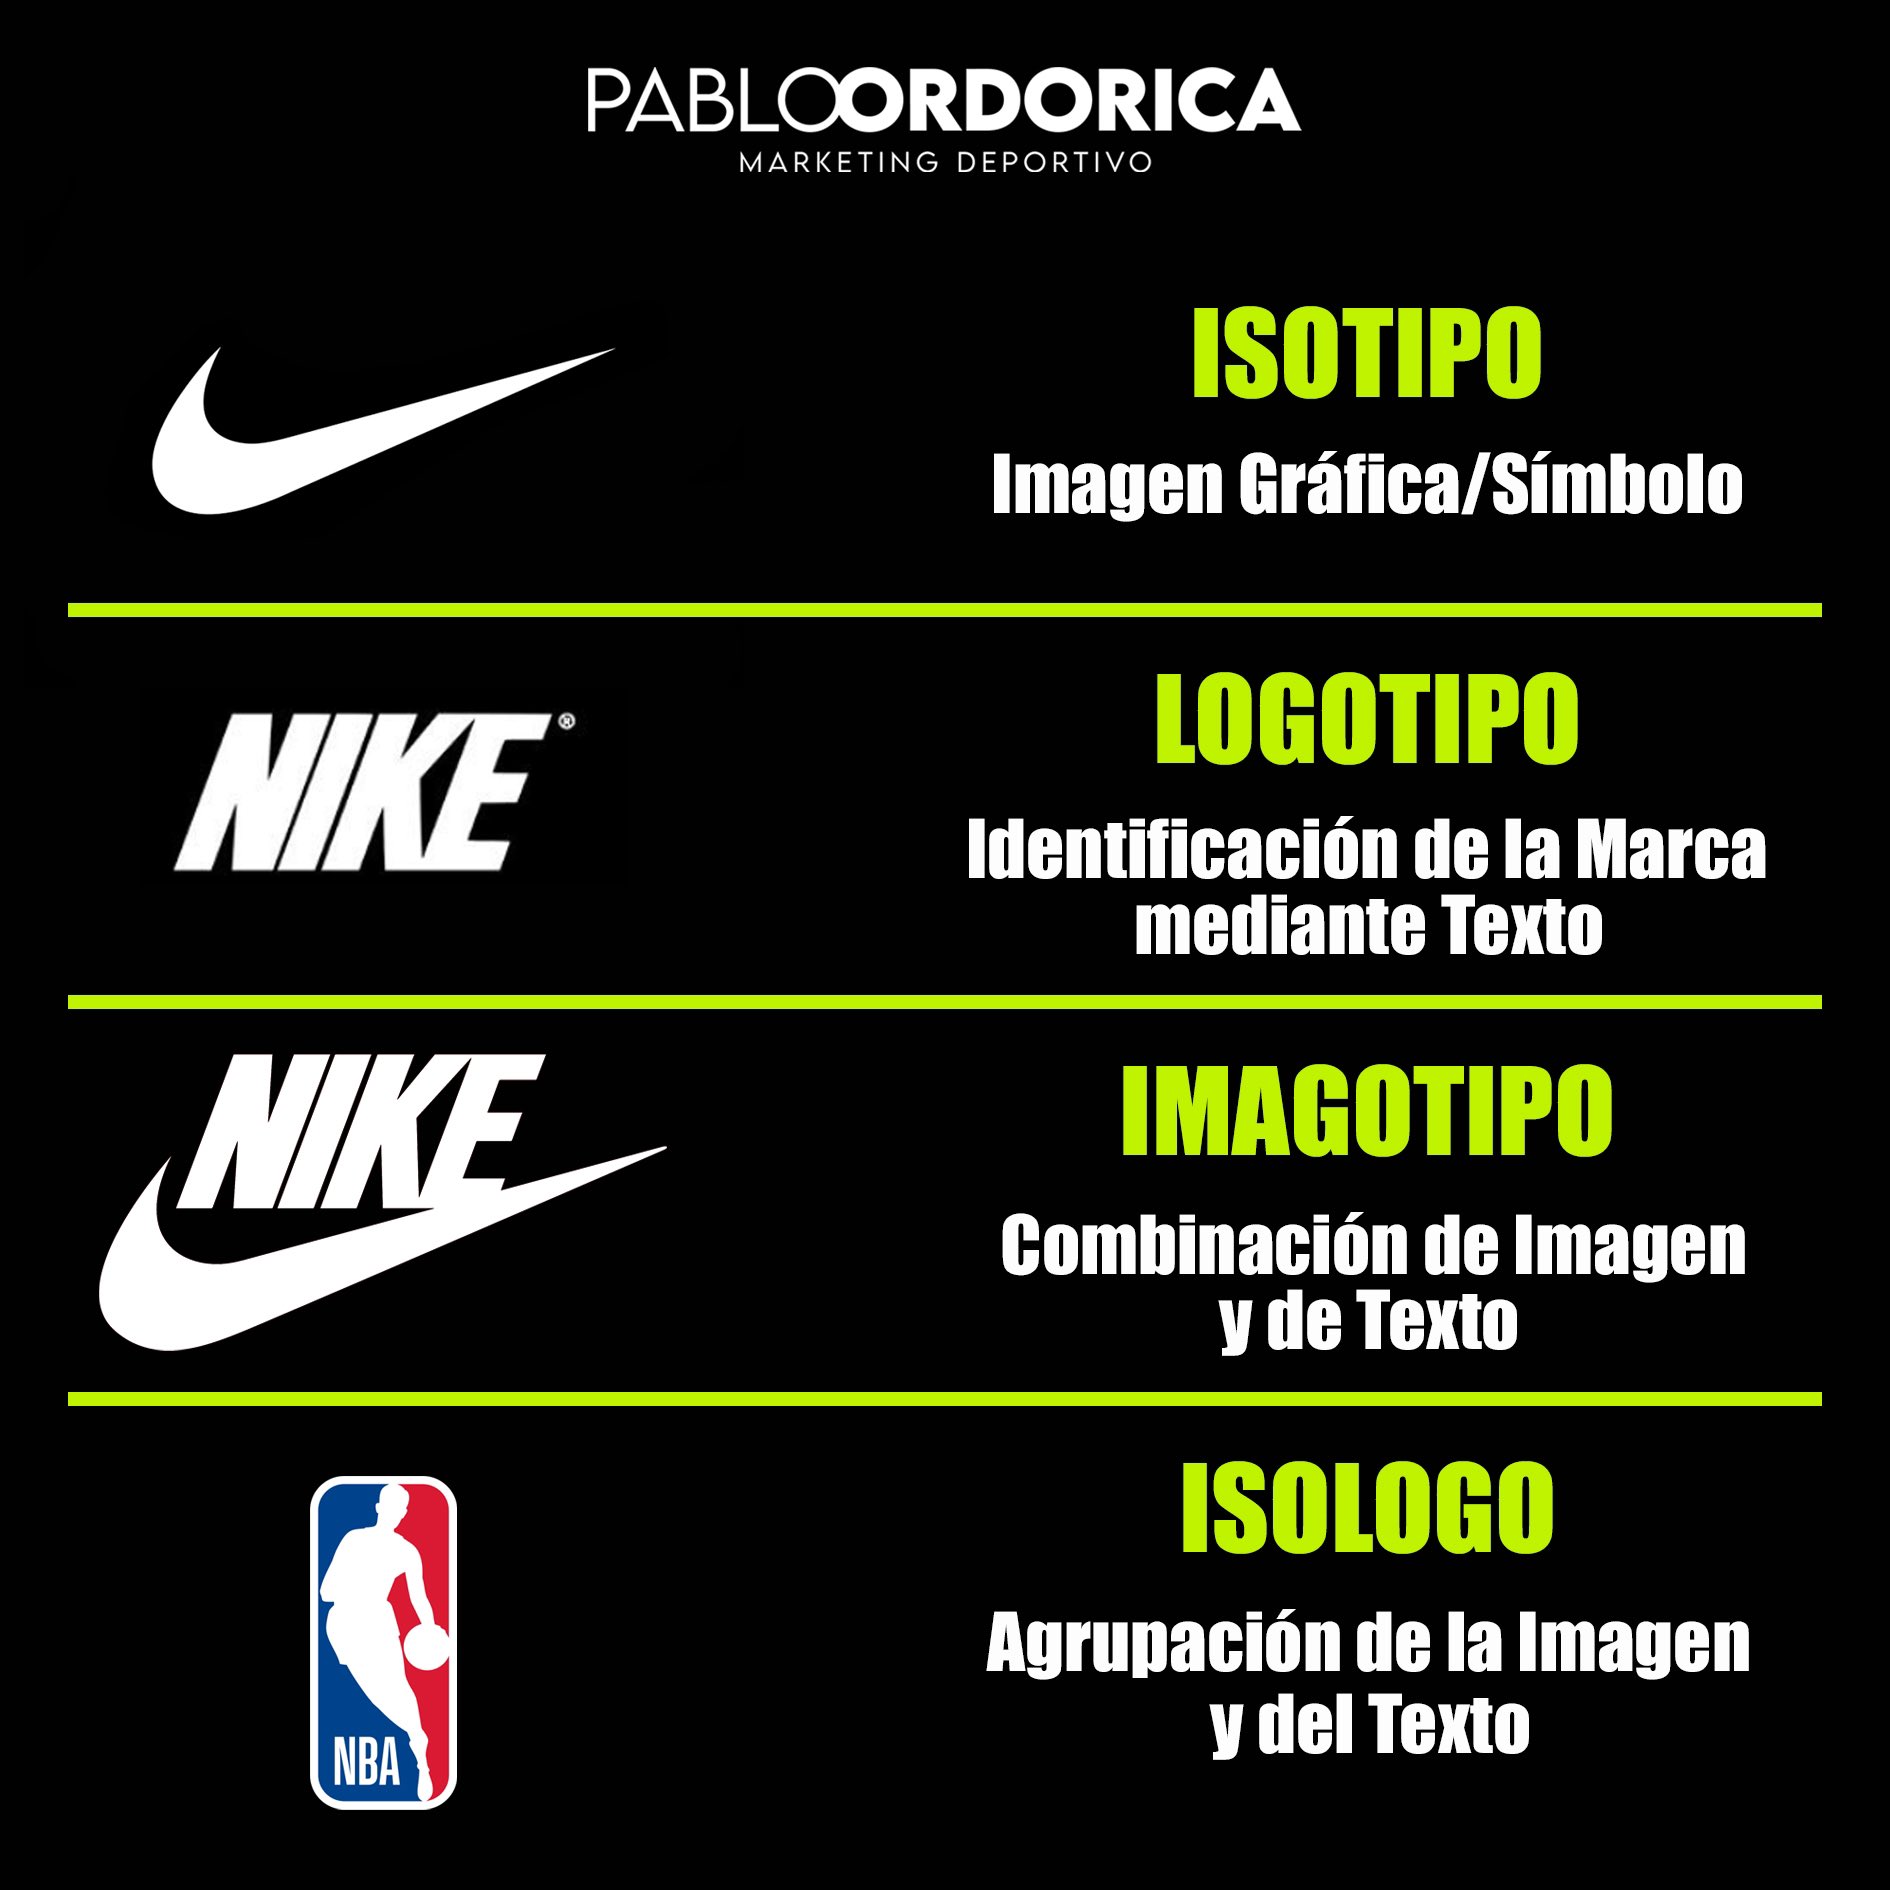 PABLO ORDORICA on Twitter: "¿Isotipo? 🤔 ¿Logotipo? 🤨 ¿Imagotipo? 🧐 ¿Isologo? 🤯 ... ¡A partir de ahora podrás diferenciarlos! 🚀 • • • #marketing #isologo #imagotipo #logotipo #marketingdeportivo #marketingdecontenidos #nike #nba https ...